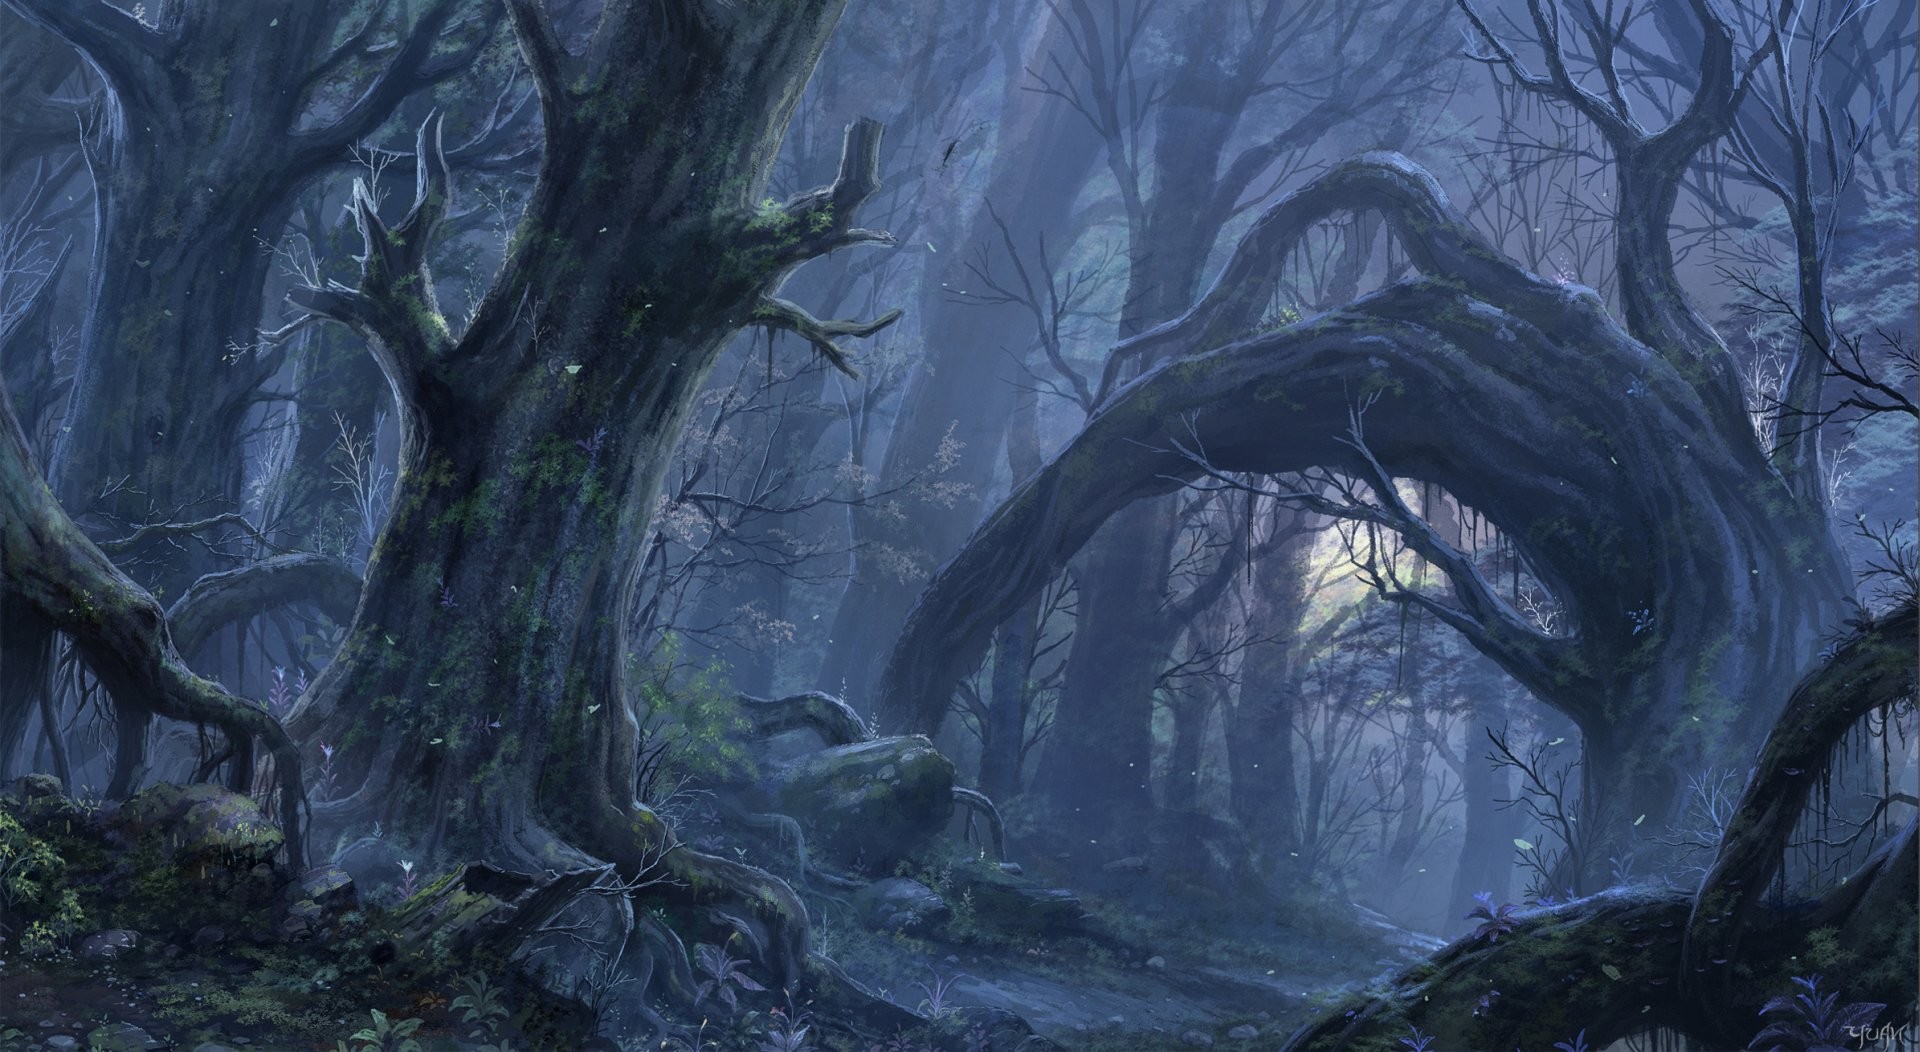 105-1056437_enchanted-forest-backgrounds-free-download-wallpaper-fantasy-dark.jpg